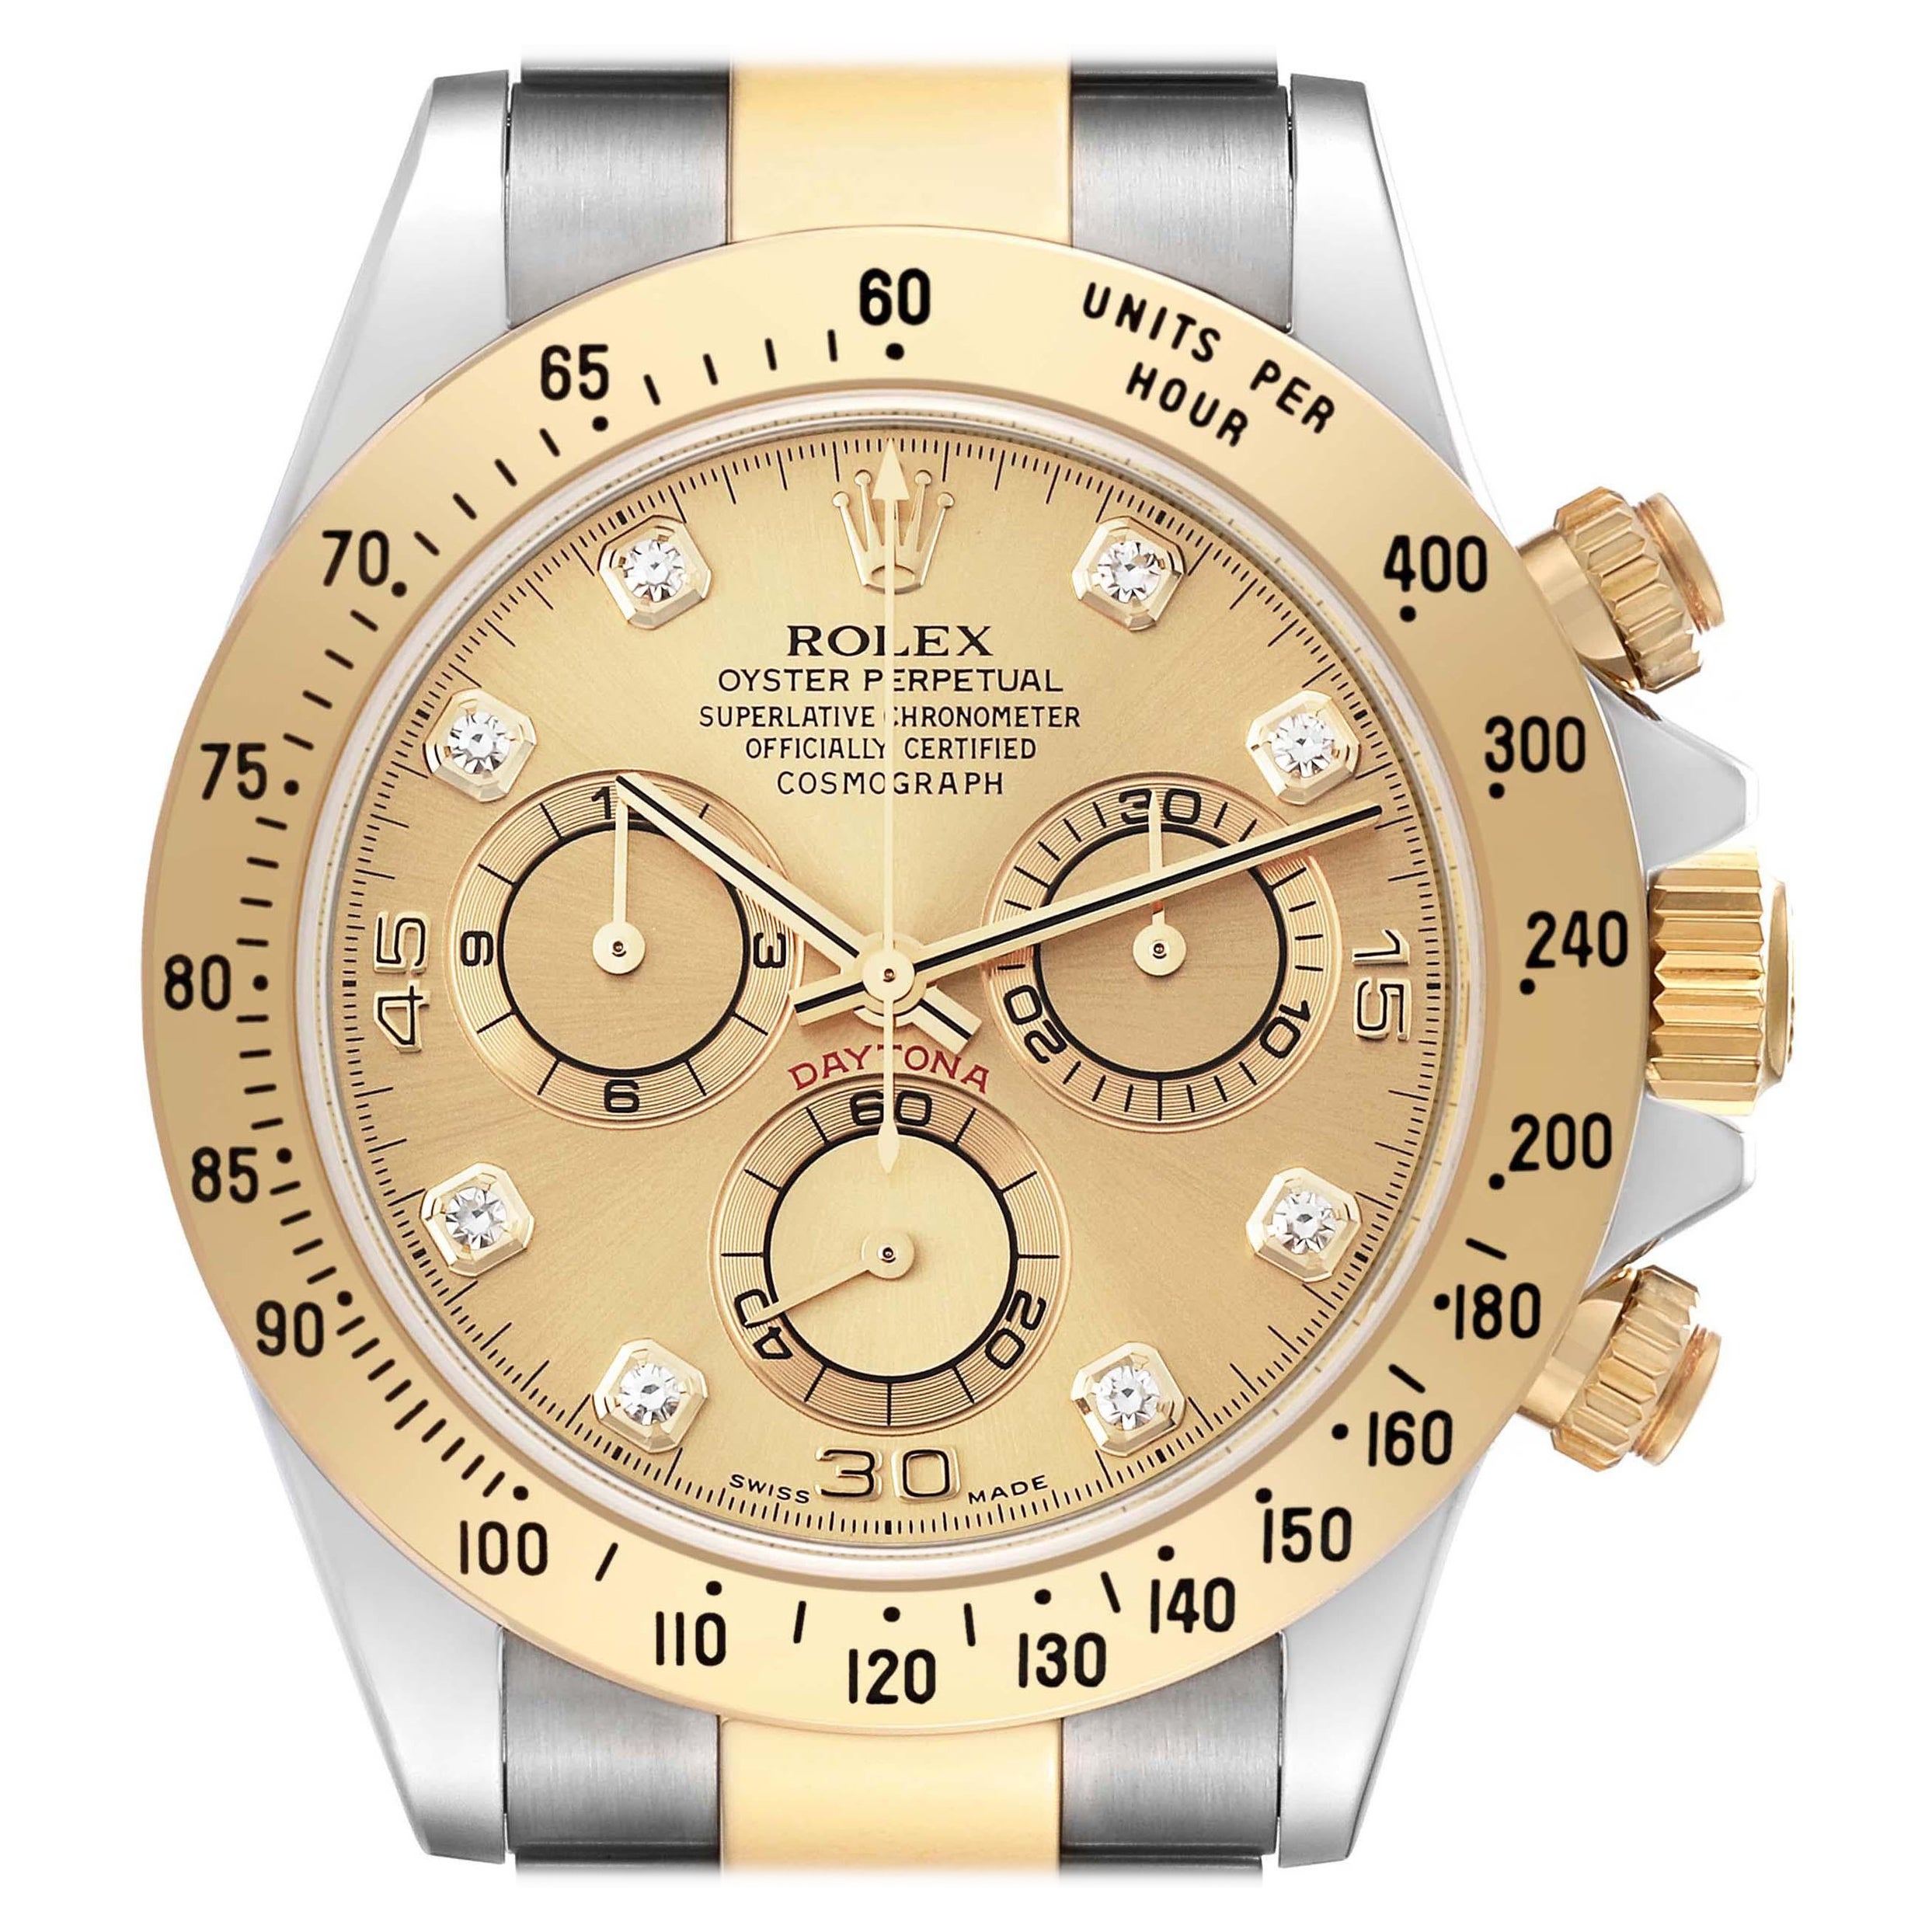 Rolex Daytona Yellow Gold Steel Diamond Dial  Mens Watch 116523 Box Papers